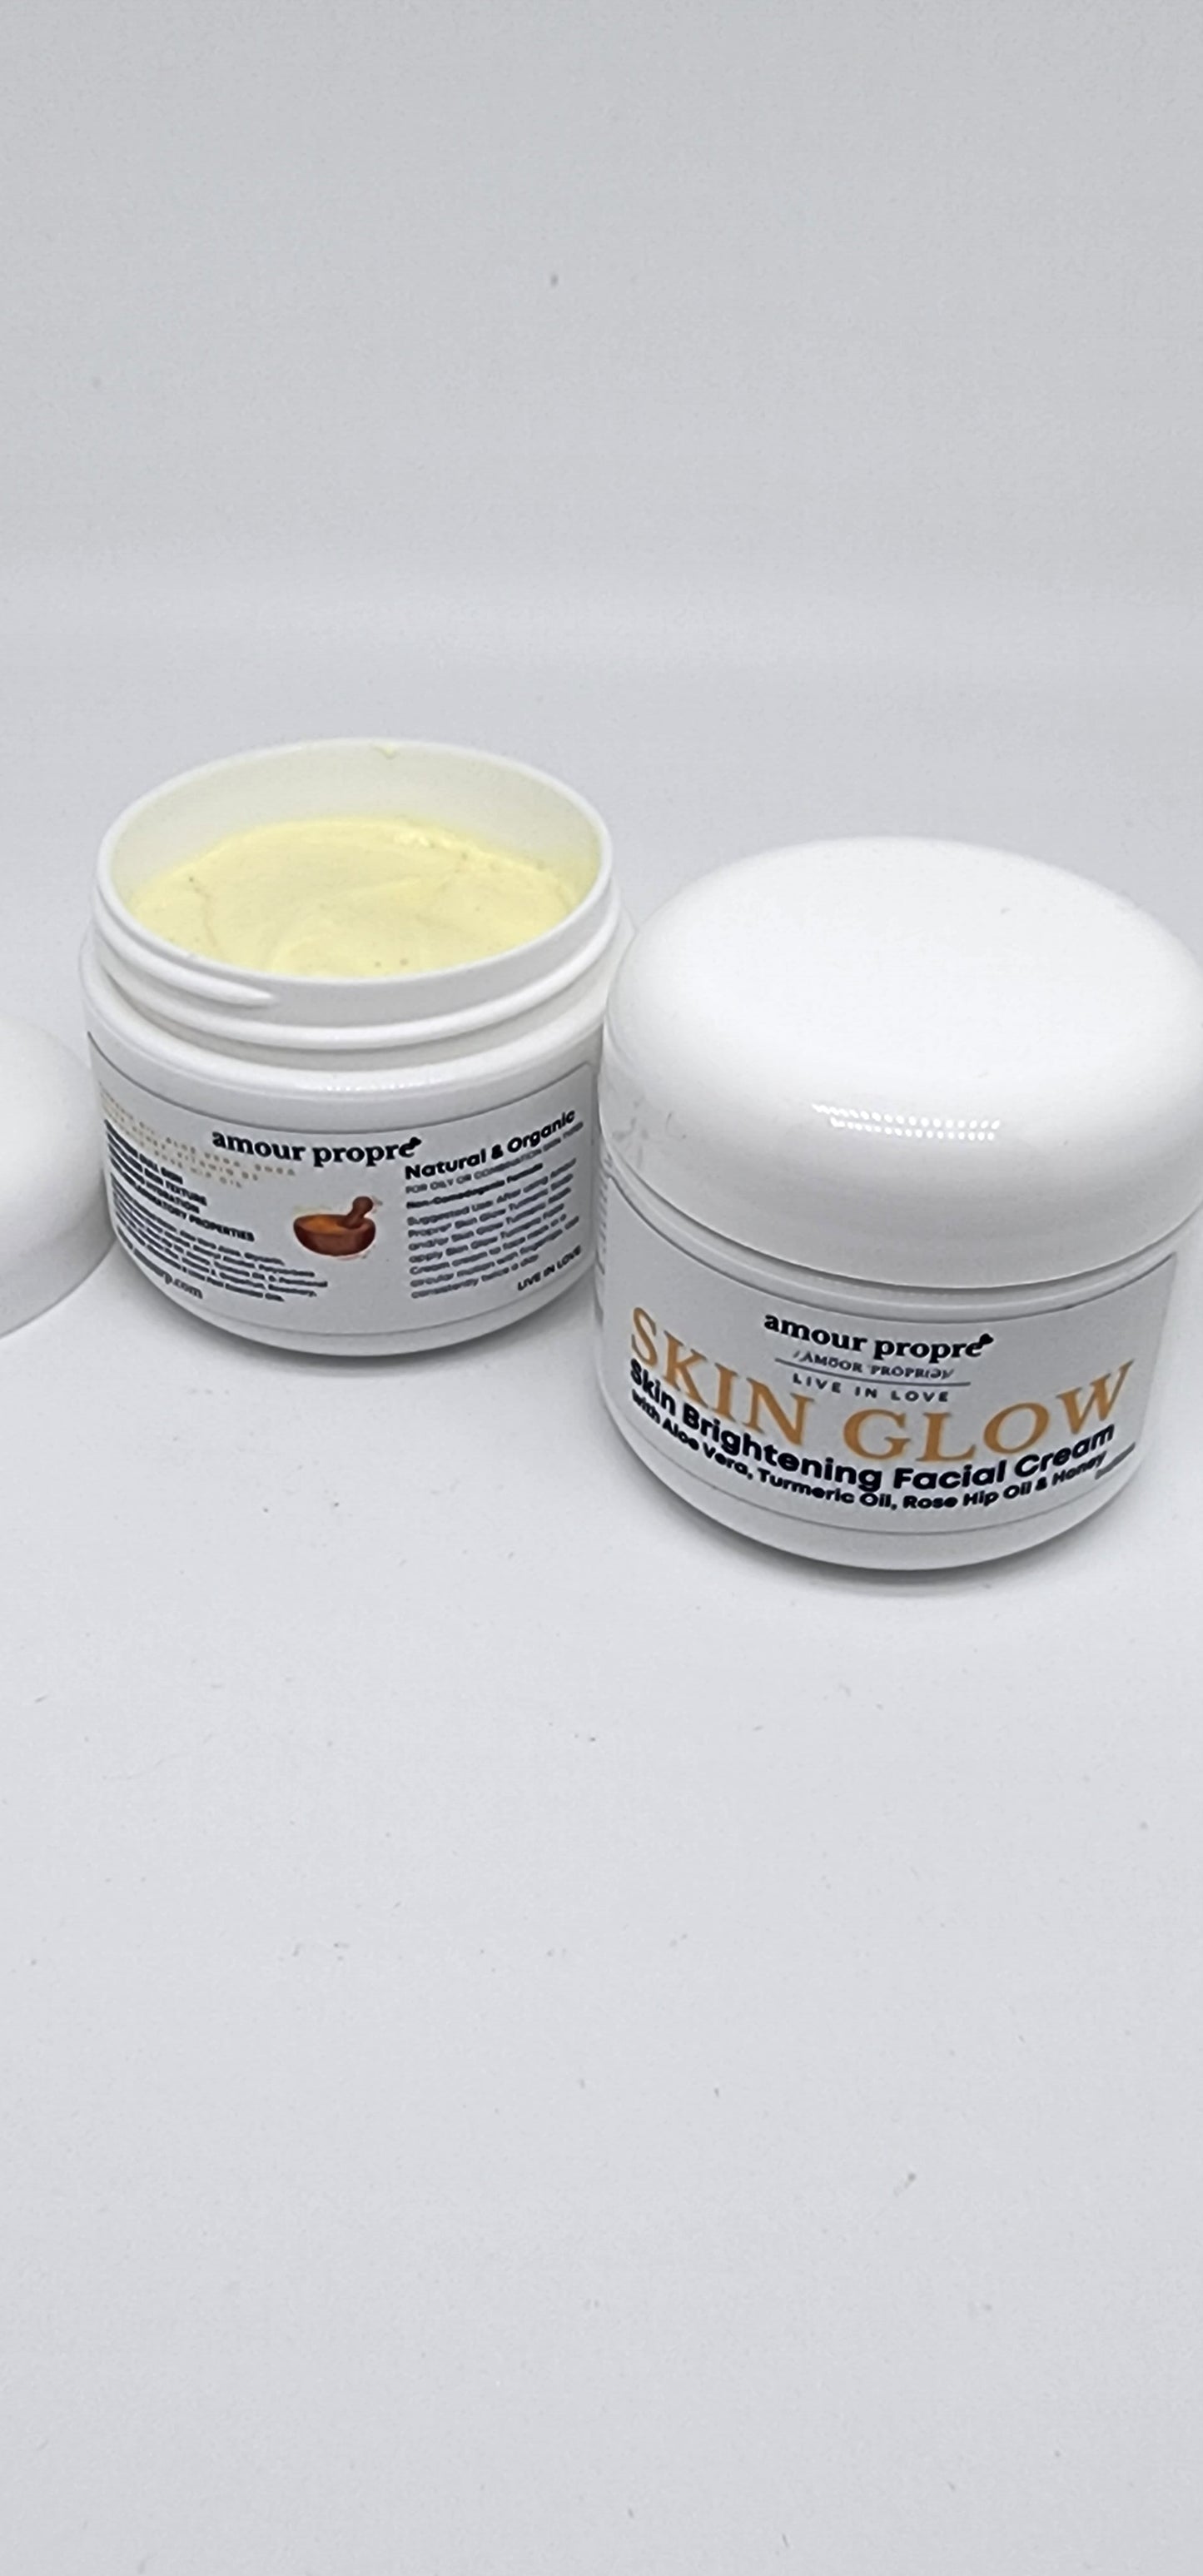 SKIN GLOW: Skin Brightening Facial Care Solution | Foaming Facial Wash, Skin Brightening Face Mask, Turmeric Face Cream